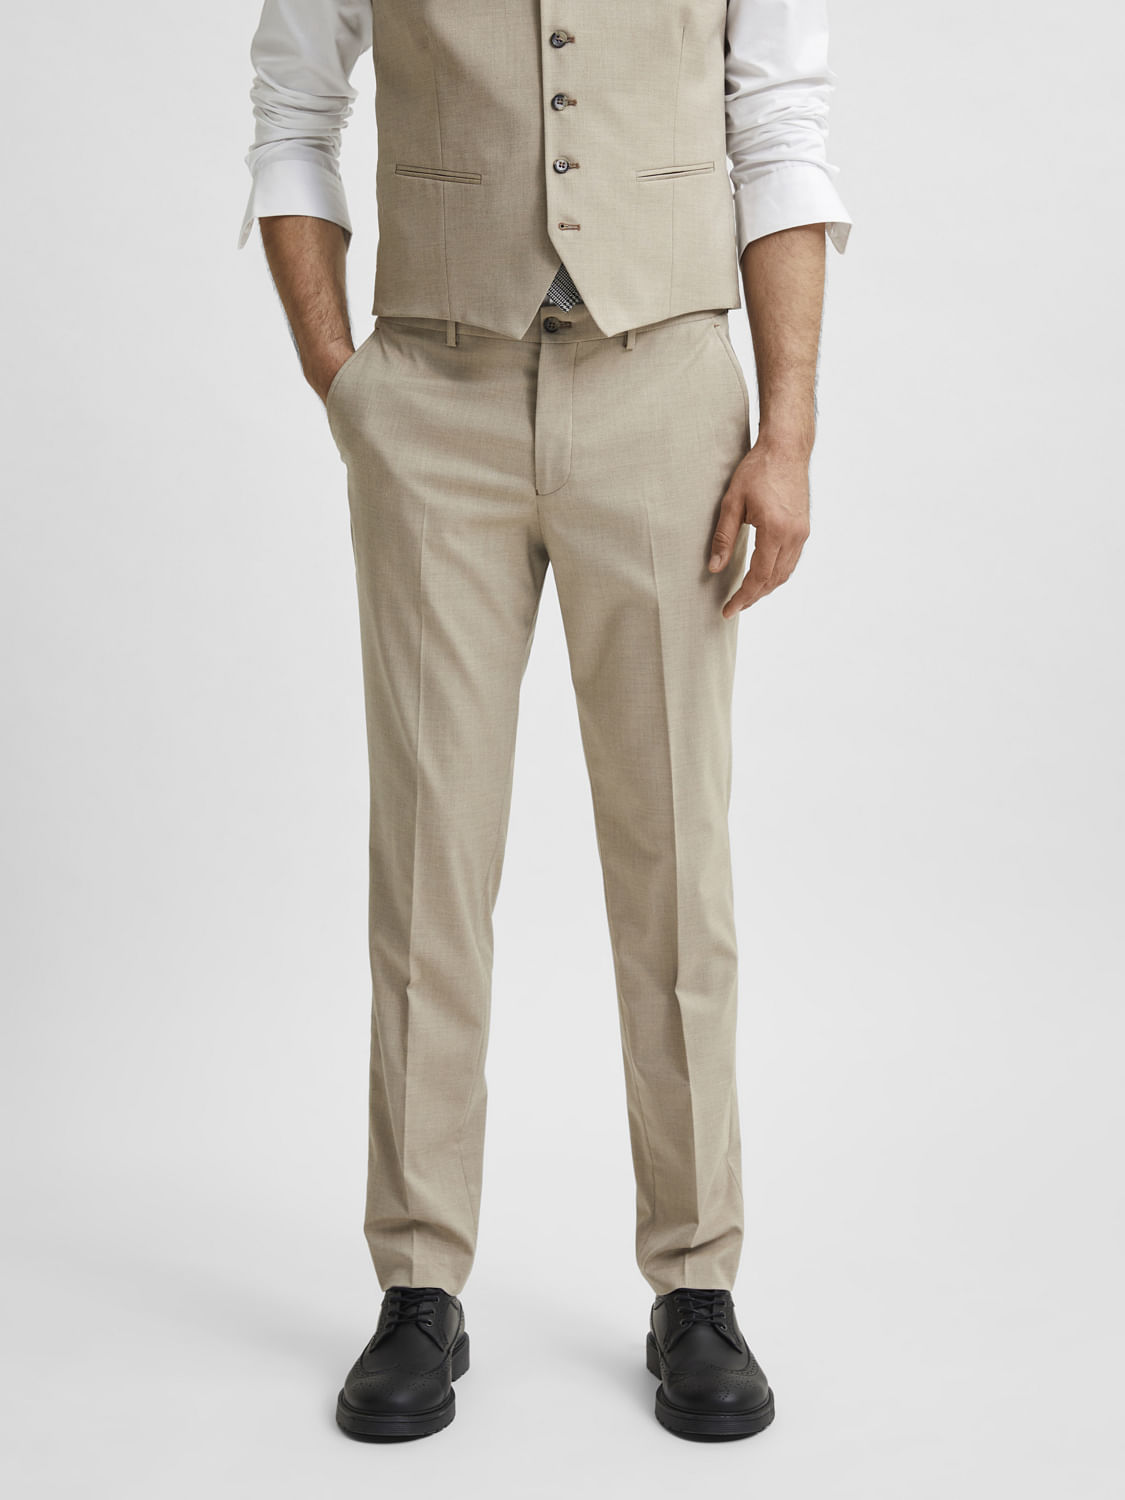 AXJ Regular Fit Men Beige Trousers - Buy AXJ Regular Fit Men Beige Trousers  Online at Best Prices in India | Flipkart.com